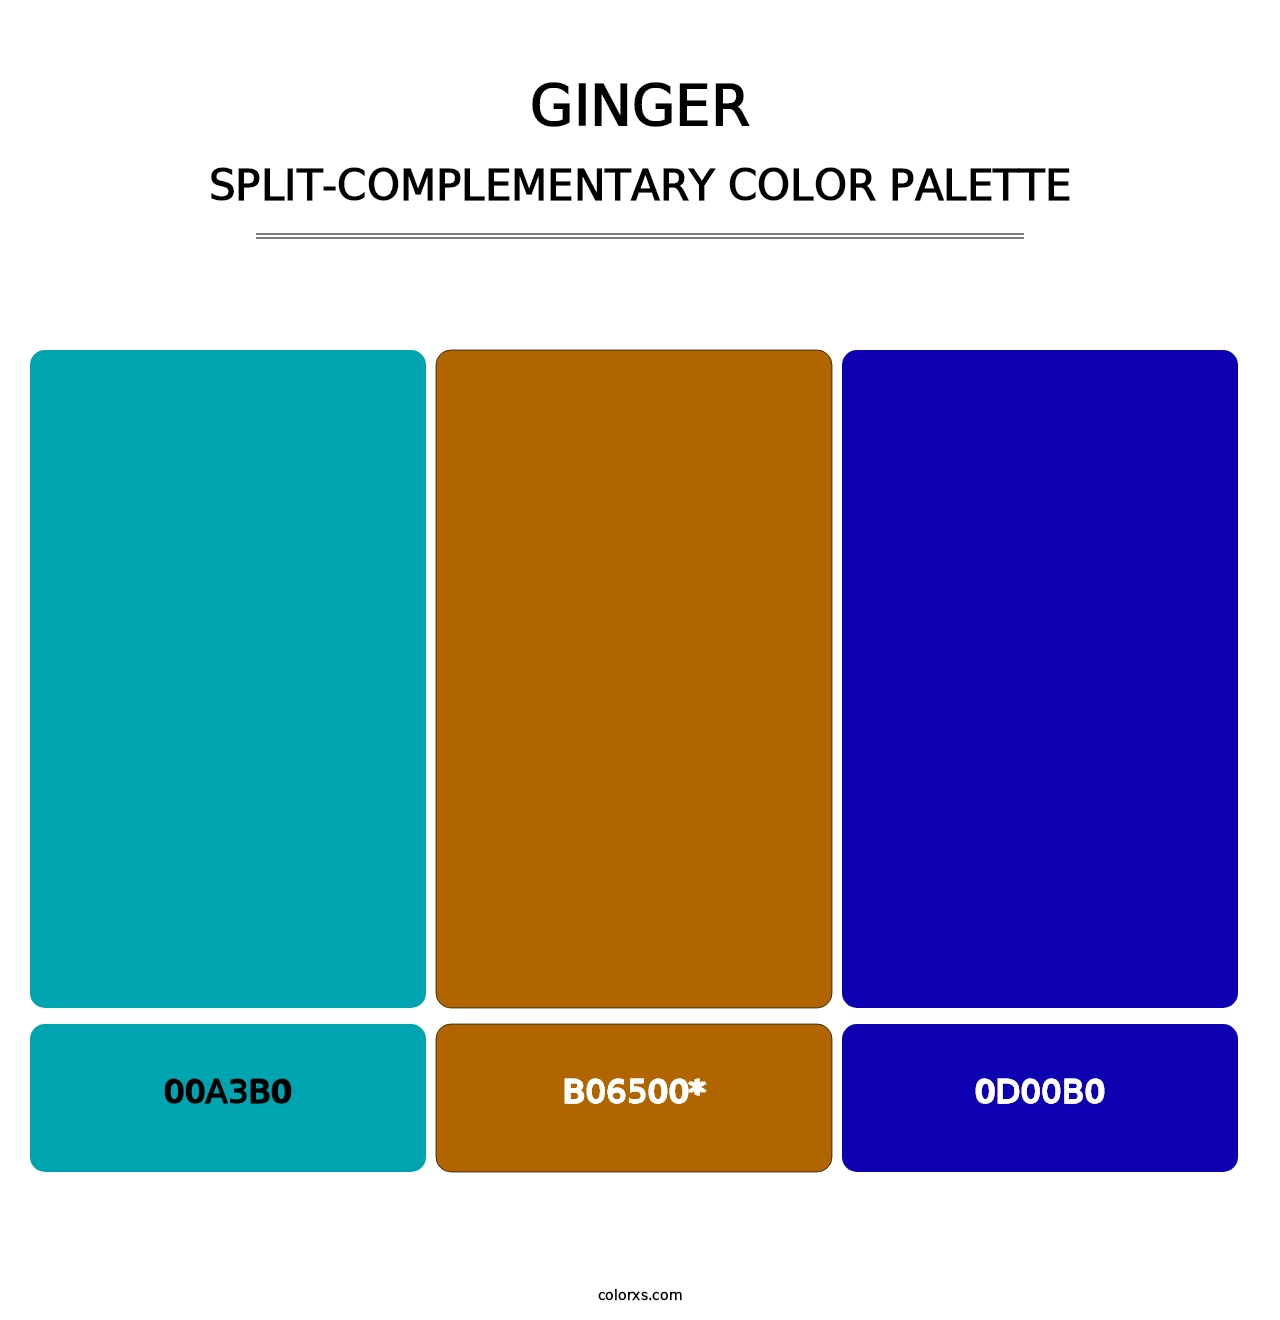 Ginger - Split-Complementary Color Palette